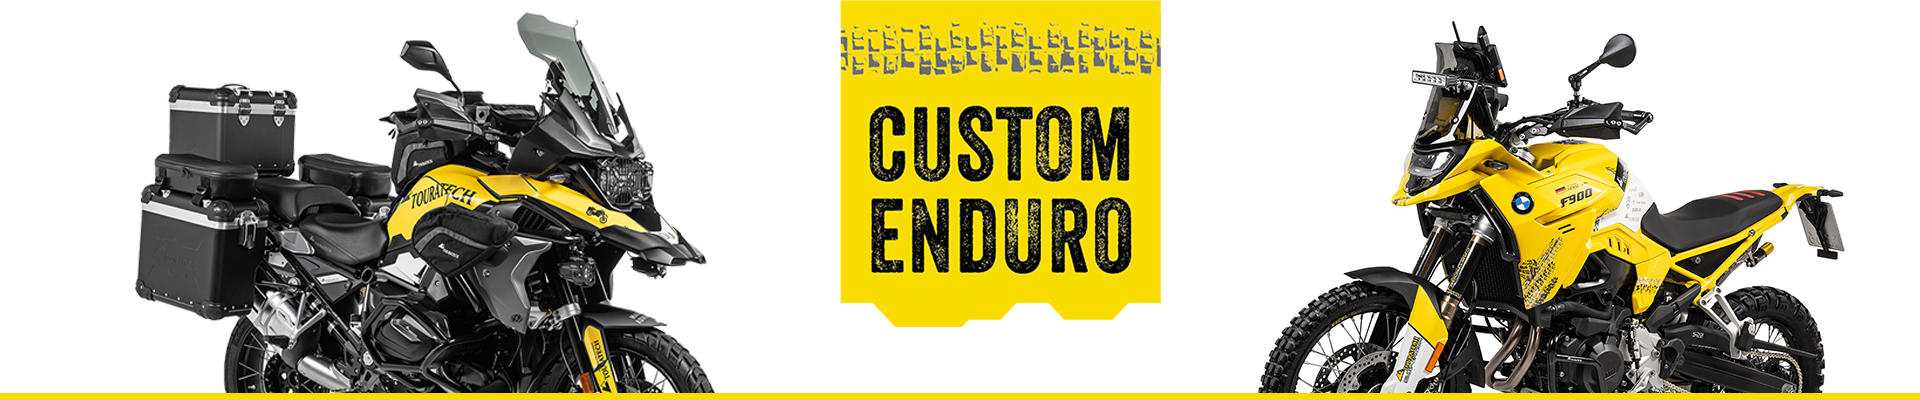 Touratech Custom Enduro